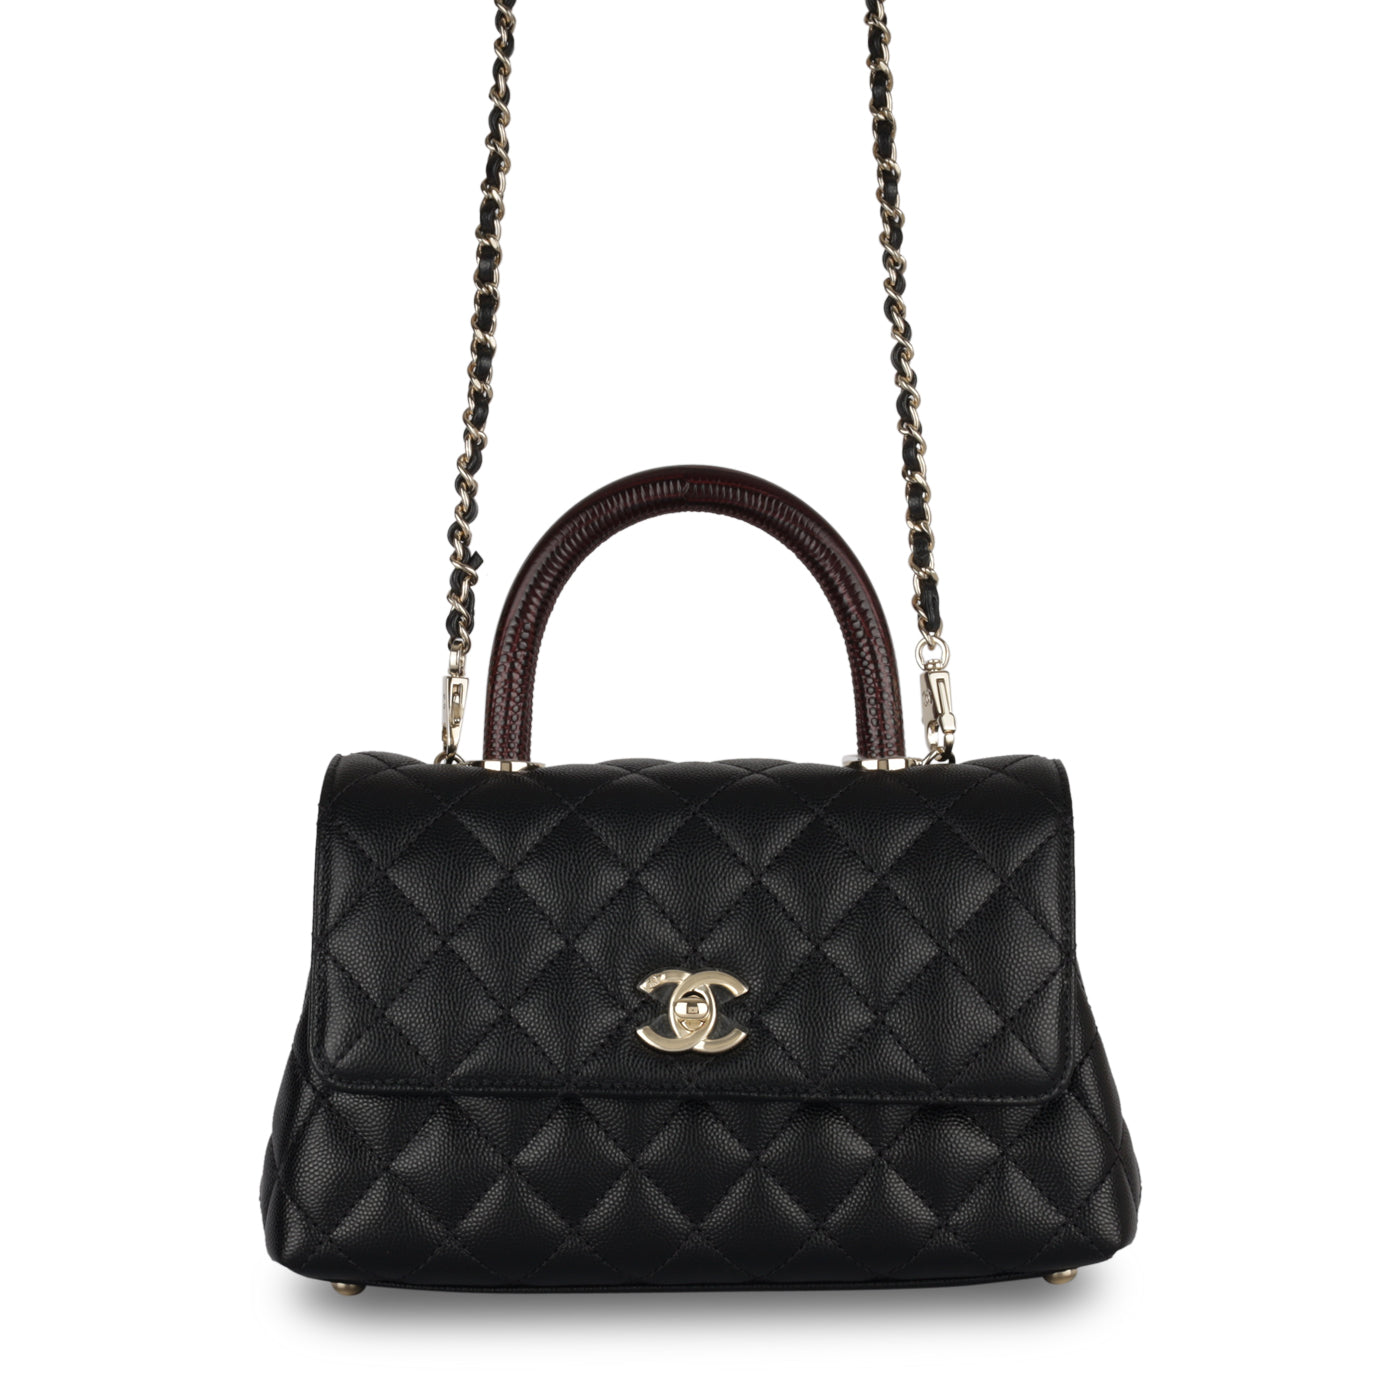 Chanel - Coco Handle - Small - Black Caviar - Lizard Handle - Brand New